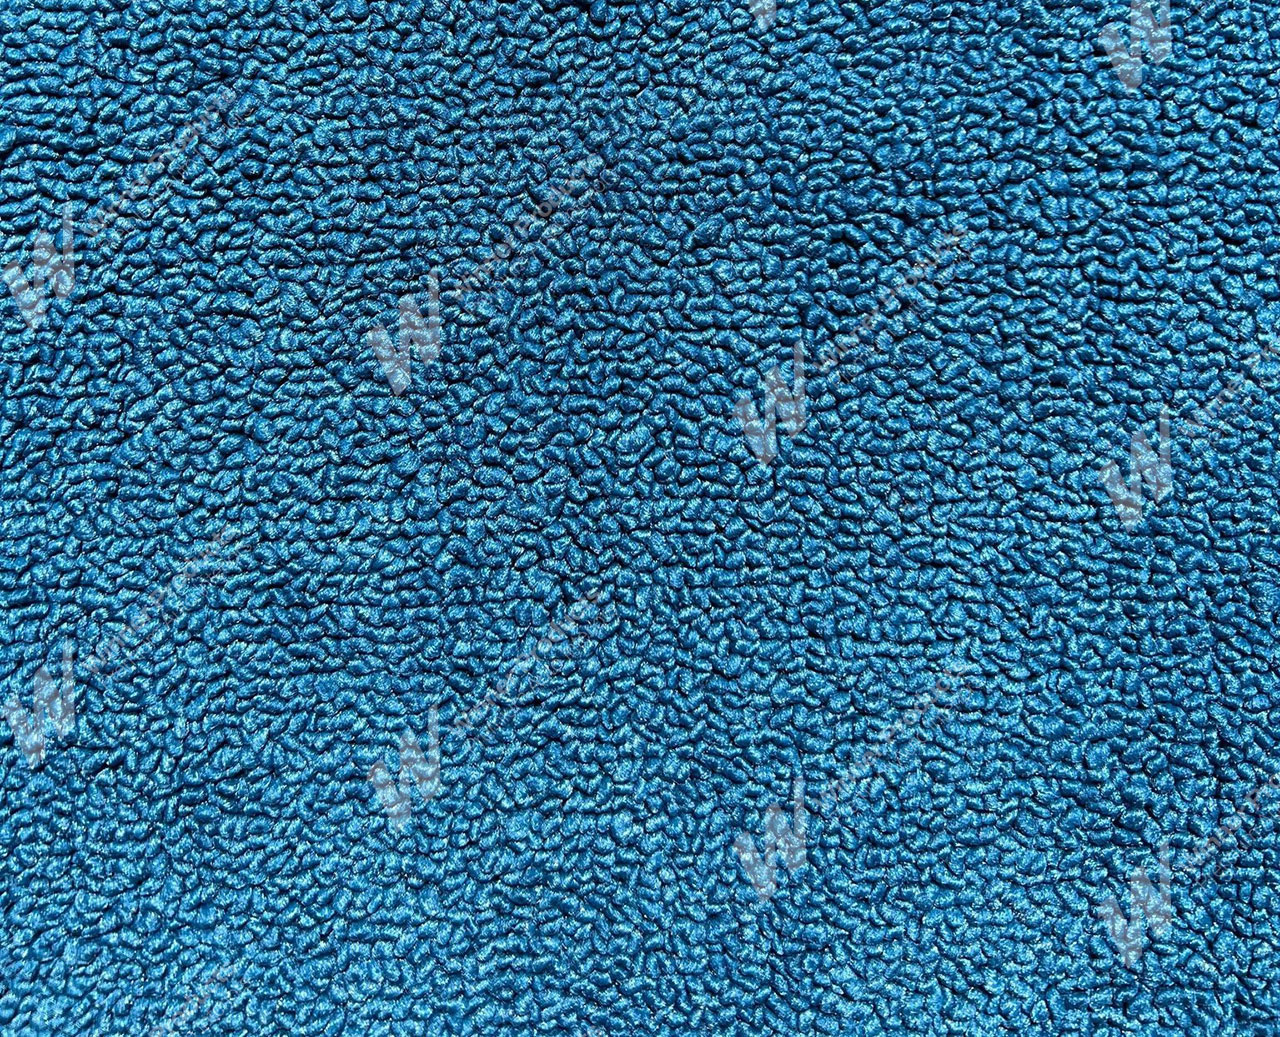 Holden Premier HT Premier Wagon 14R Twilight Blue Carpet (Image 1 of 1)